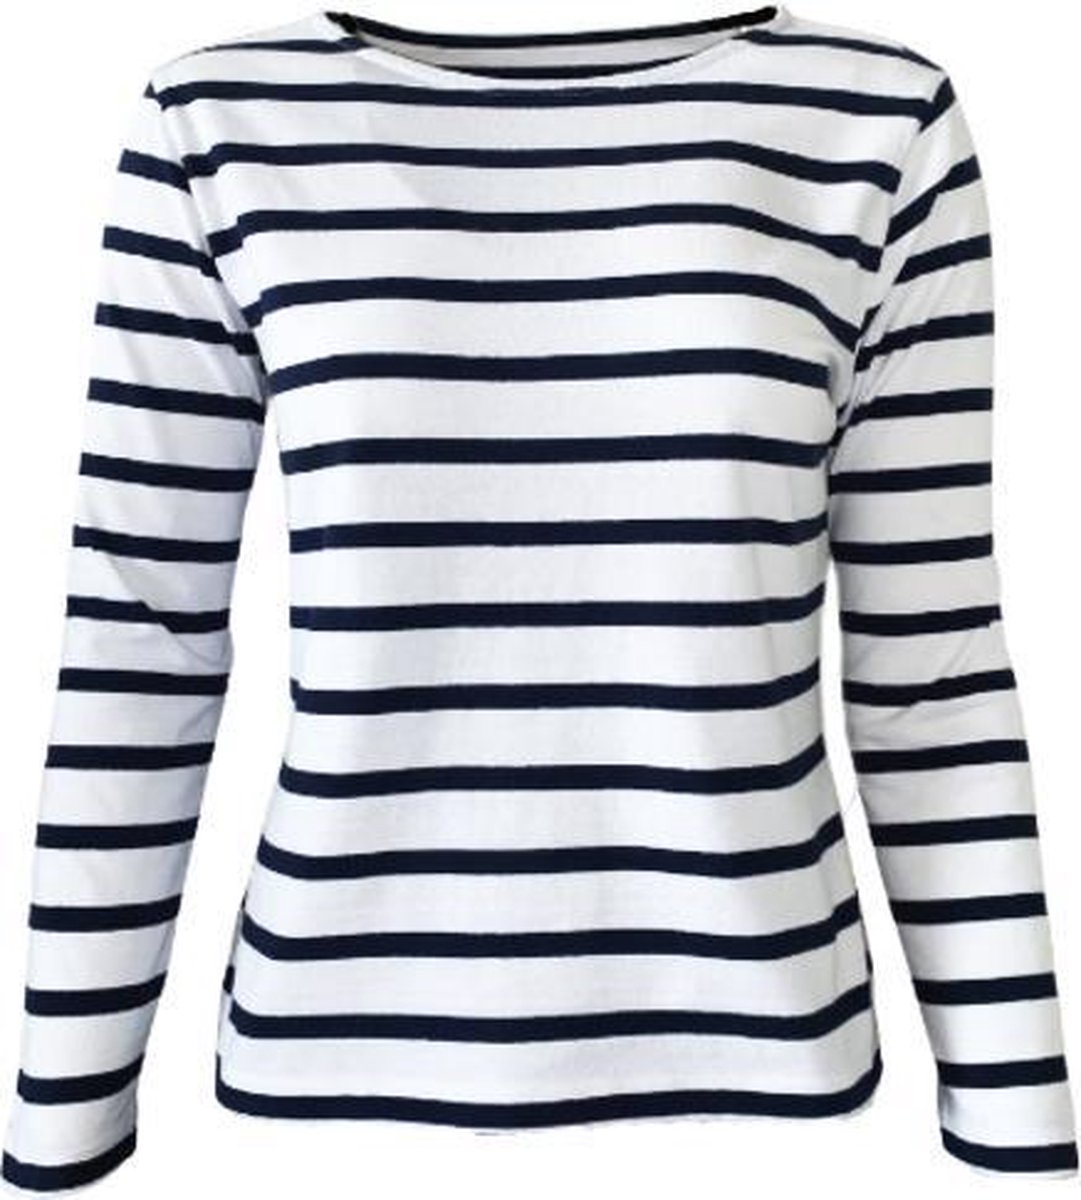 MOOI! Company - Streep T-shirt Blauw-Wit - Losse pasvorm - 100% Katoen Linnen Look - model Kim - Lange mouw - L